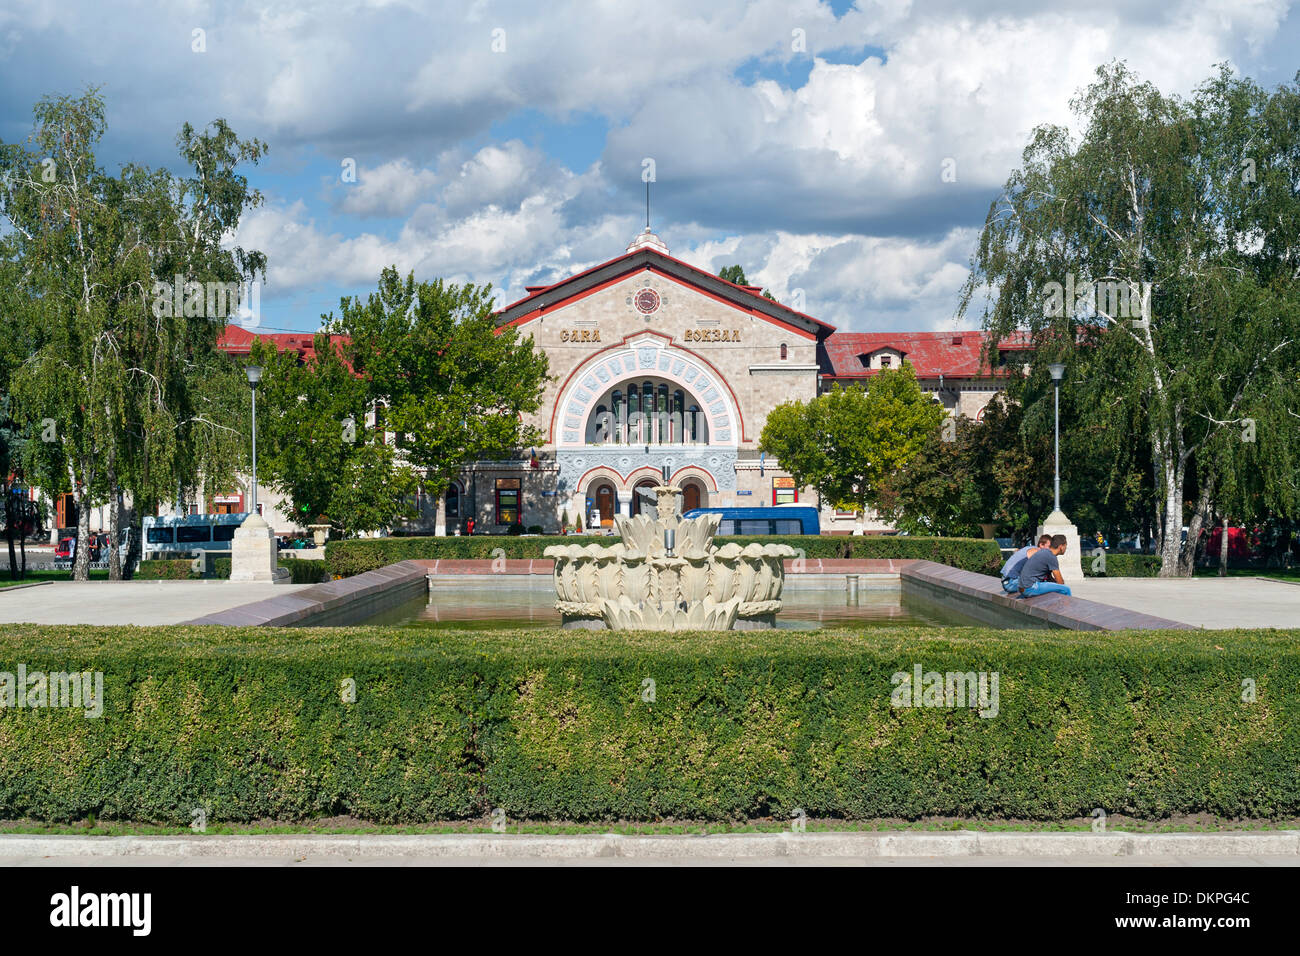 The train station in Chisinau, the capital of Moldova in Eastern Europe. Stock Photo